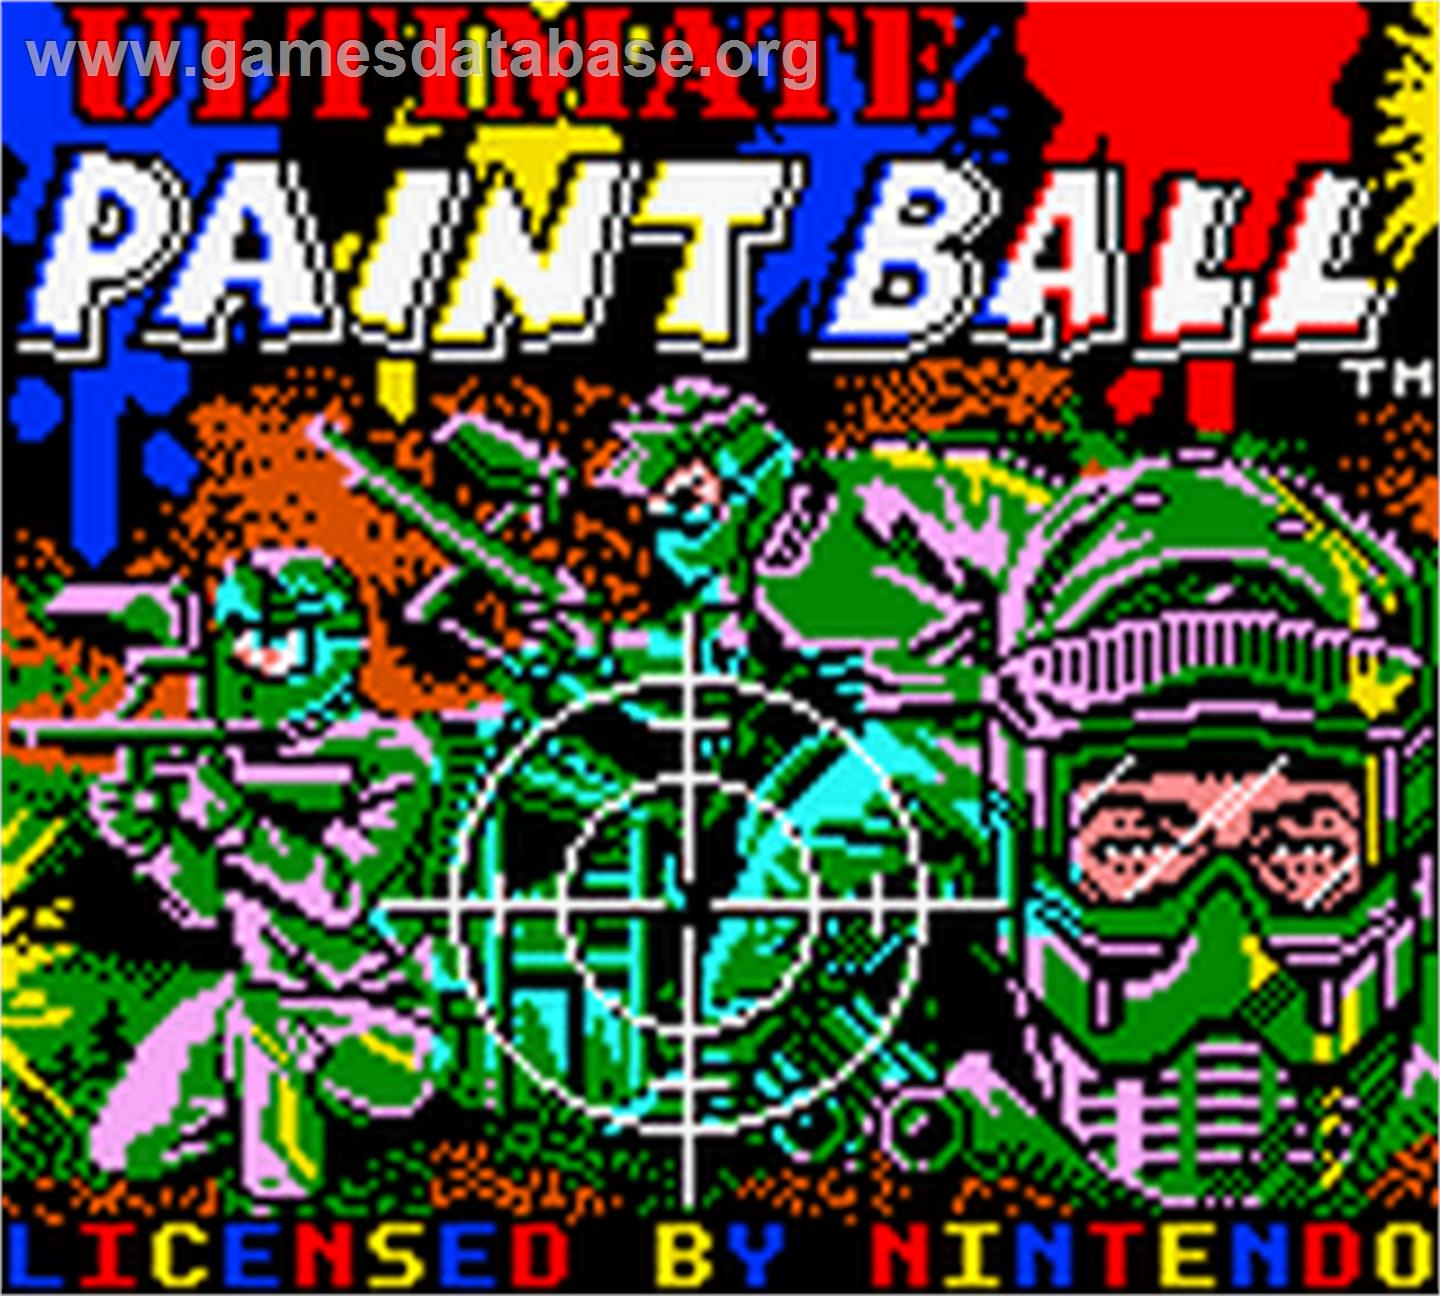 Ultimate Paintball - Nintendo Game Boy Color - Artwork - Title Screen